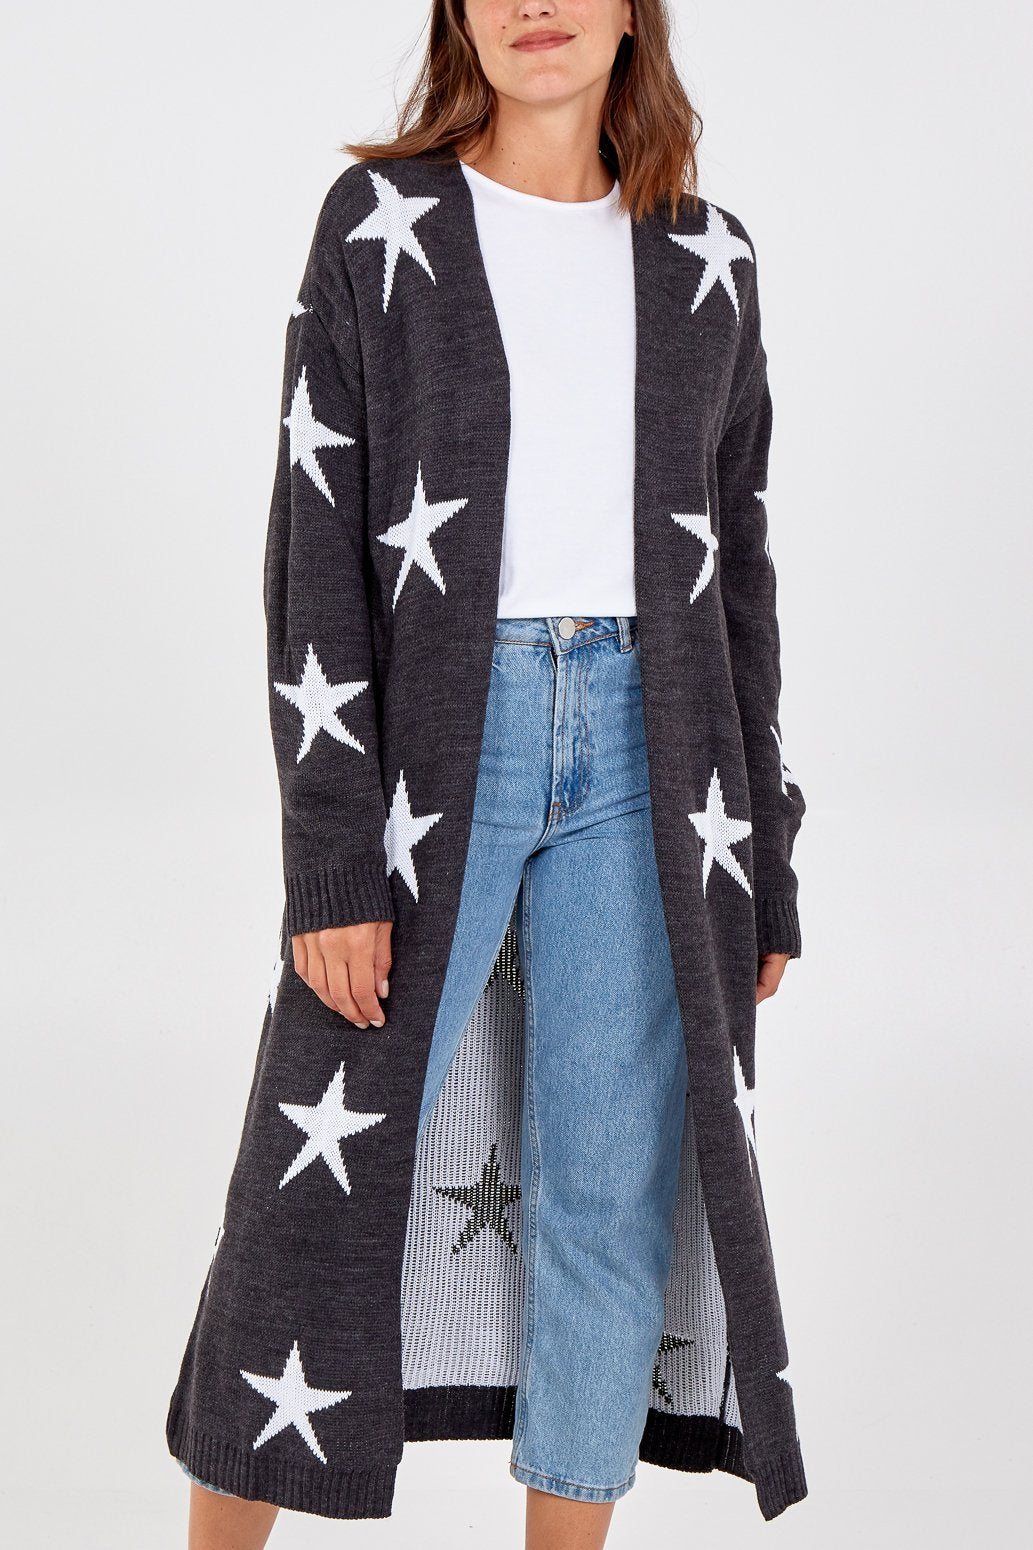 Sharon - Long Knitted Star Cardigan - Pinstripe